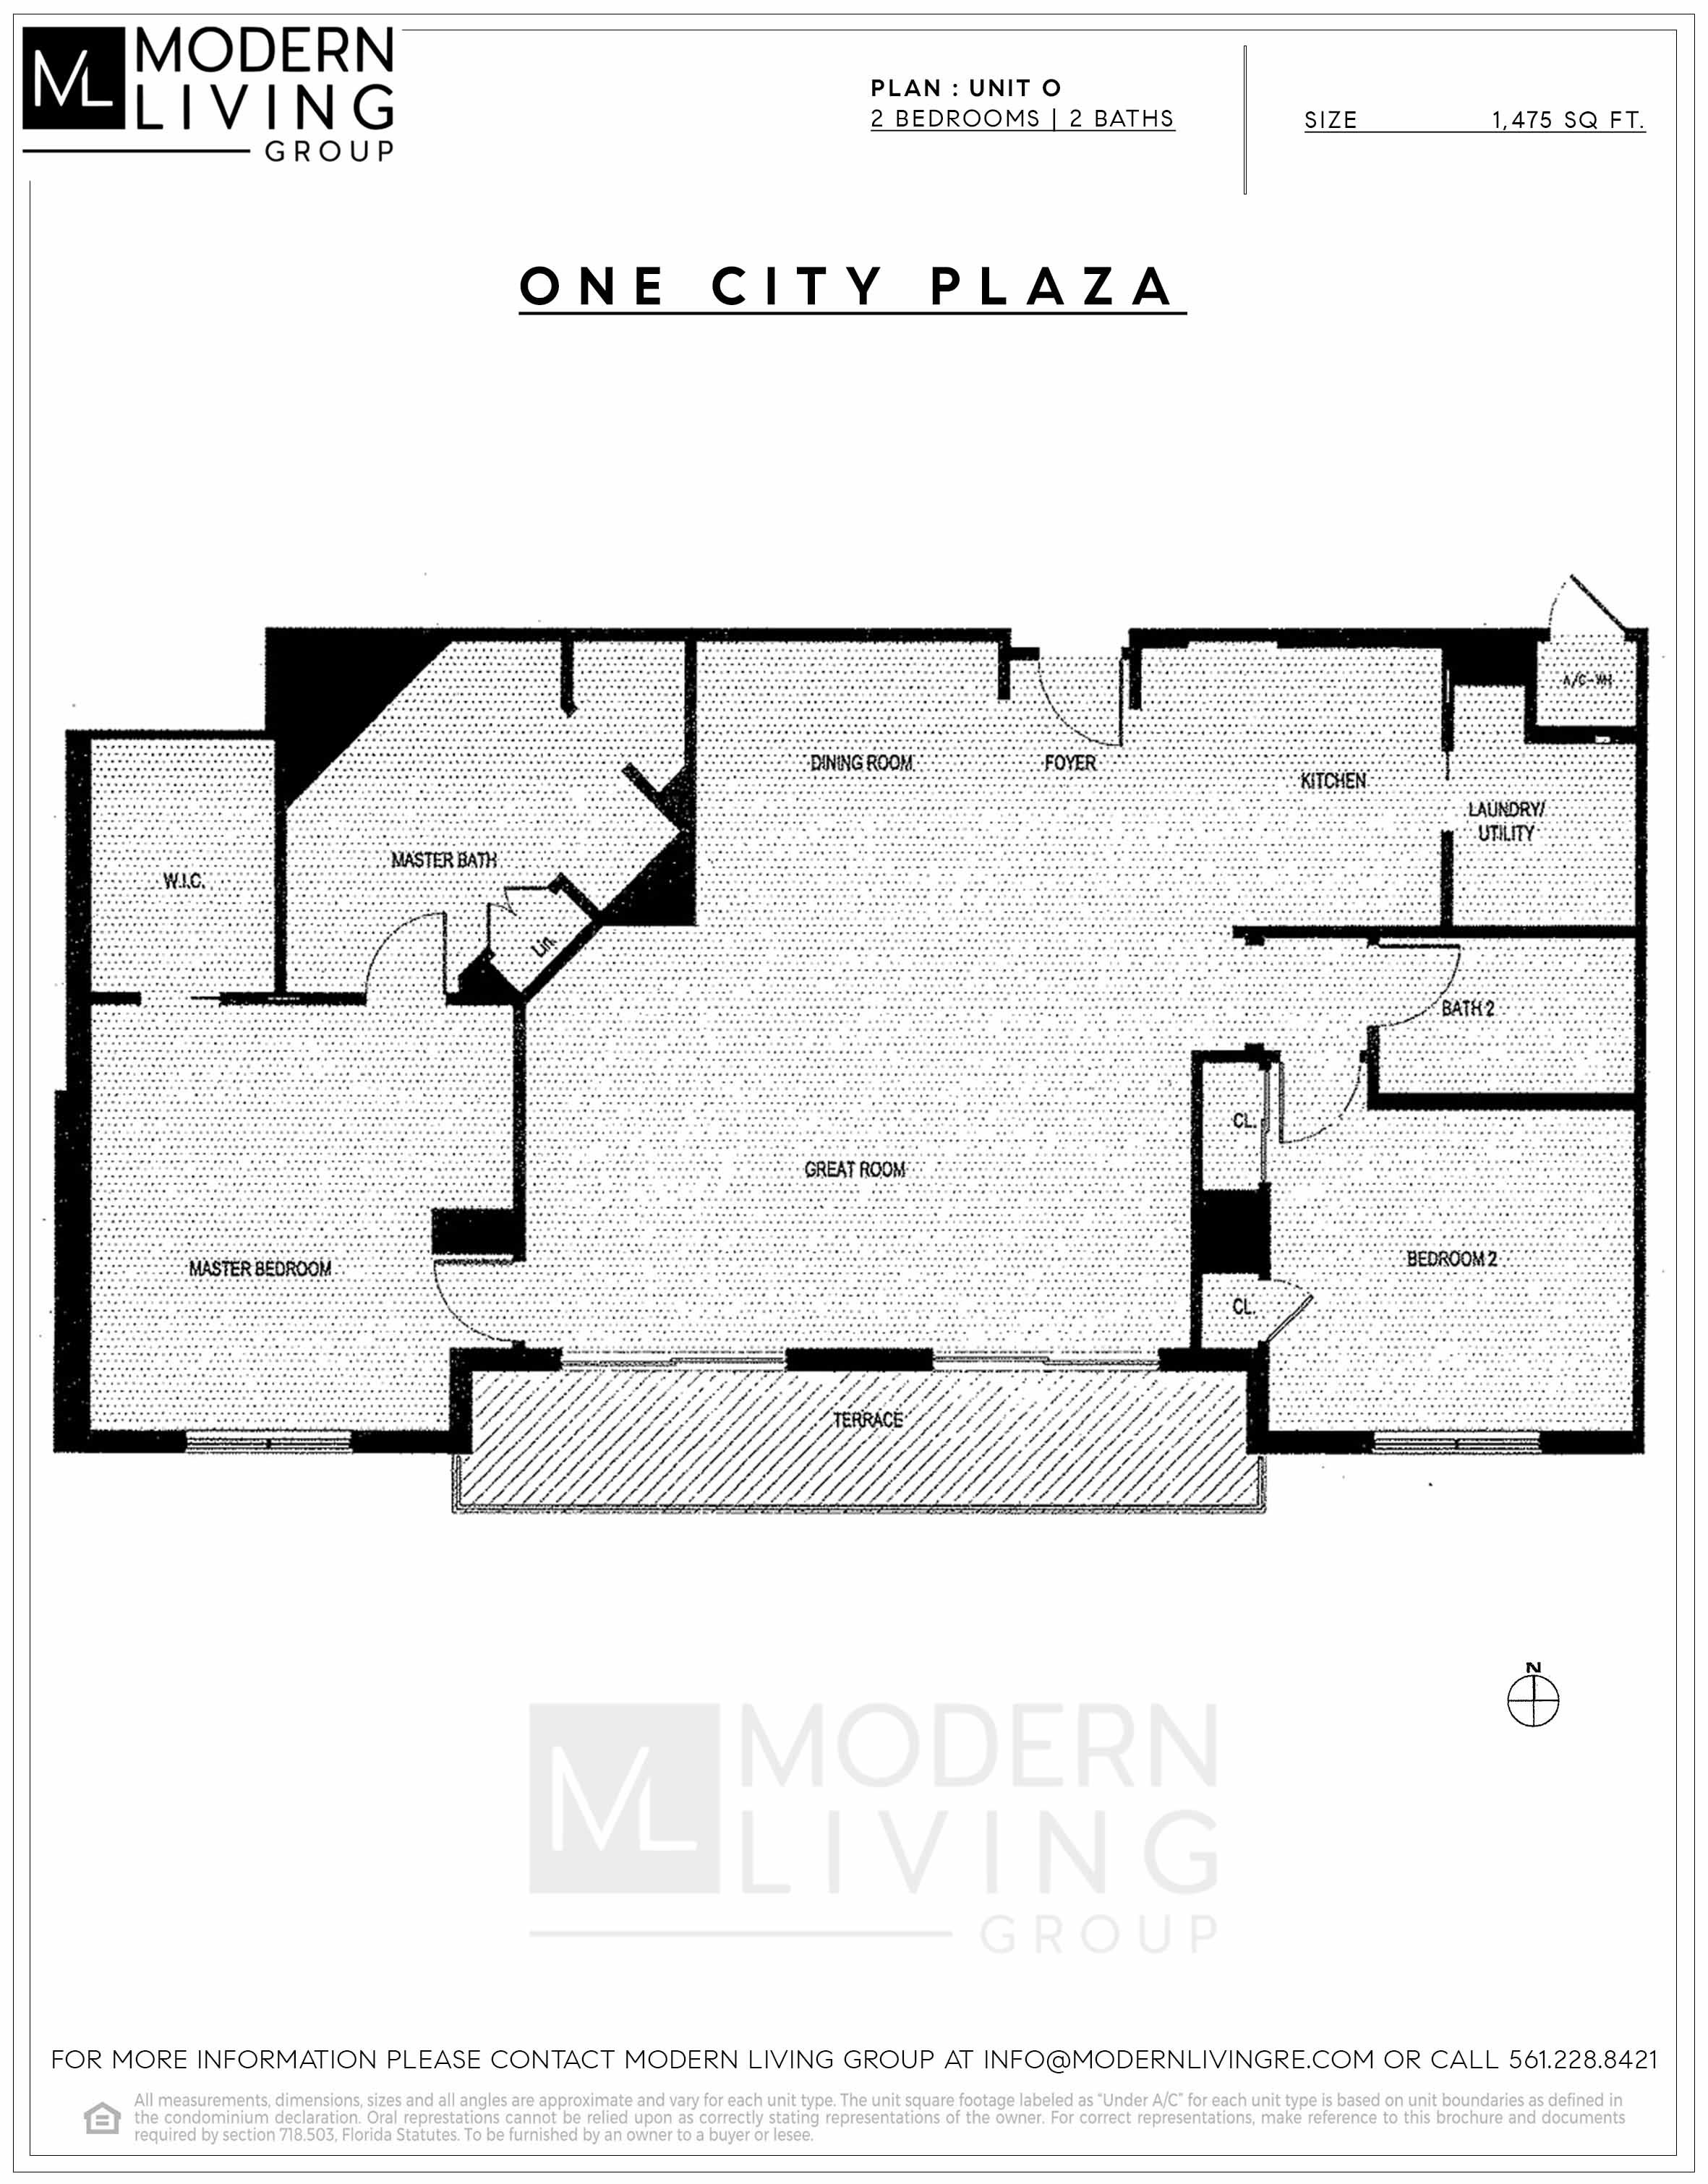 Floor Plan for One City Plaza Floorplans, Unit O